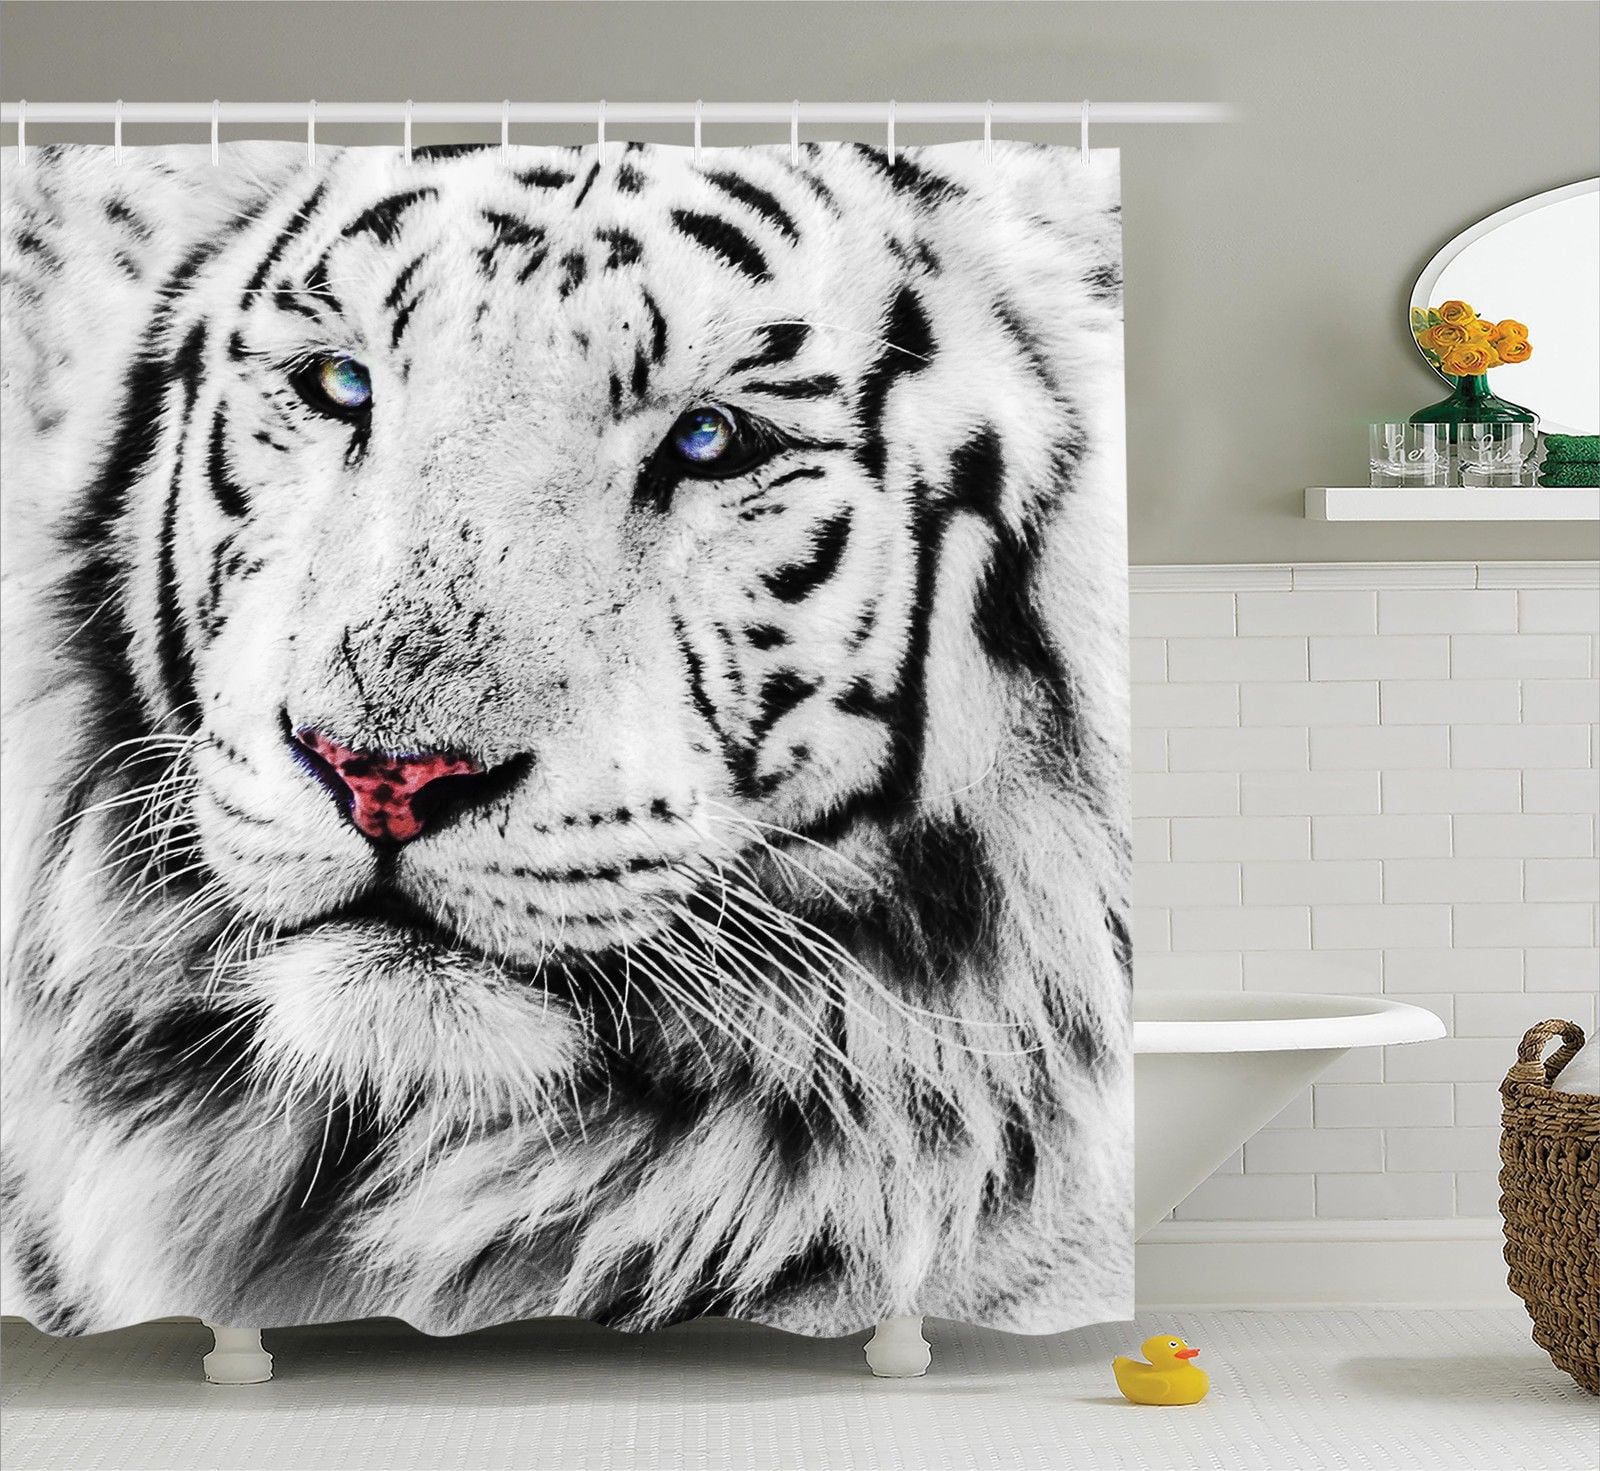 Tiger Realistic Portrait Shower Curtain Liner Waterproof Fabric Bathroom Hooks 